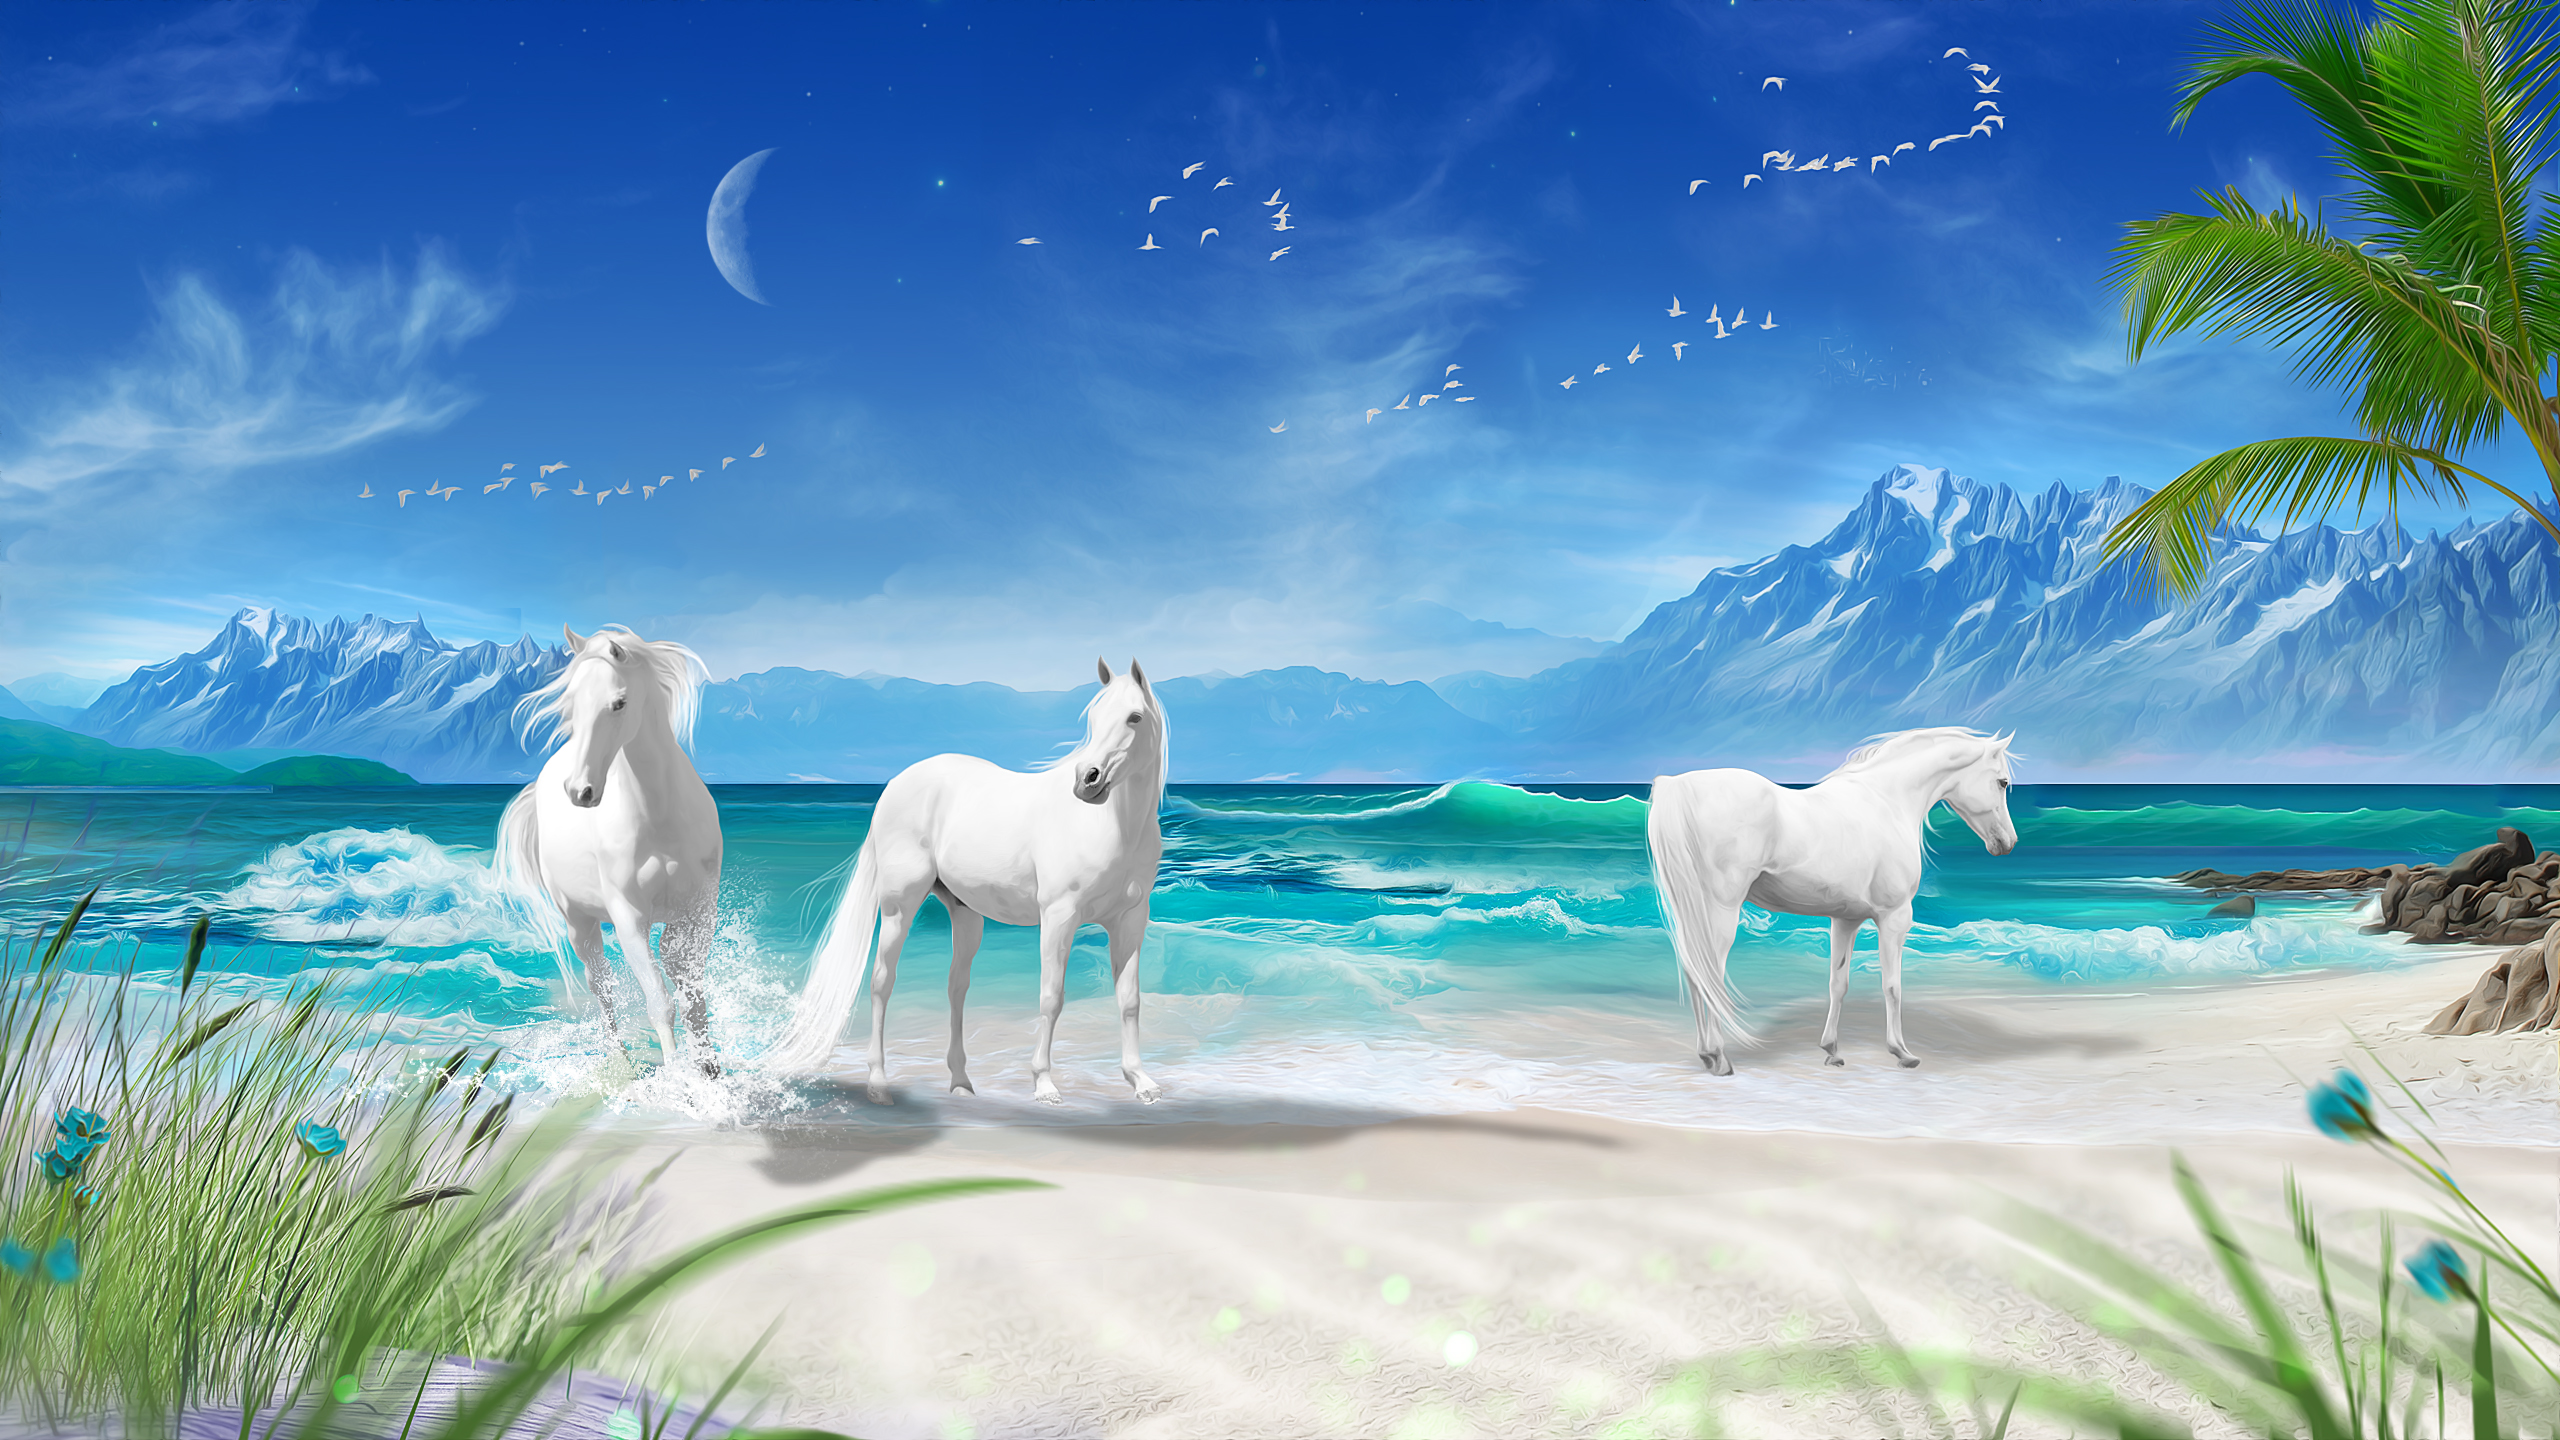 Fantasy Horse HD Wallpaper | Background Image